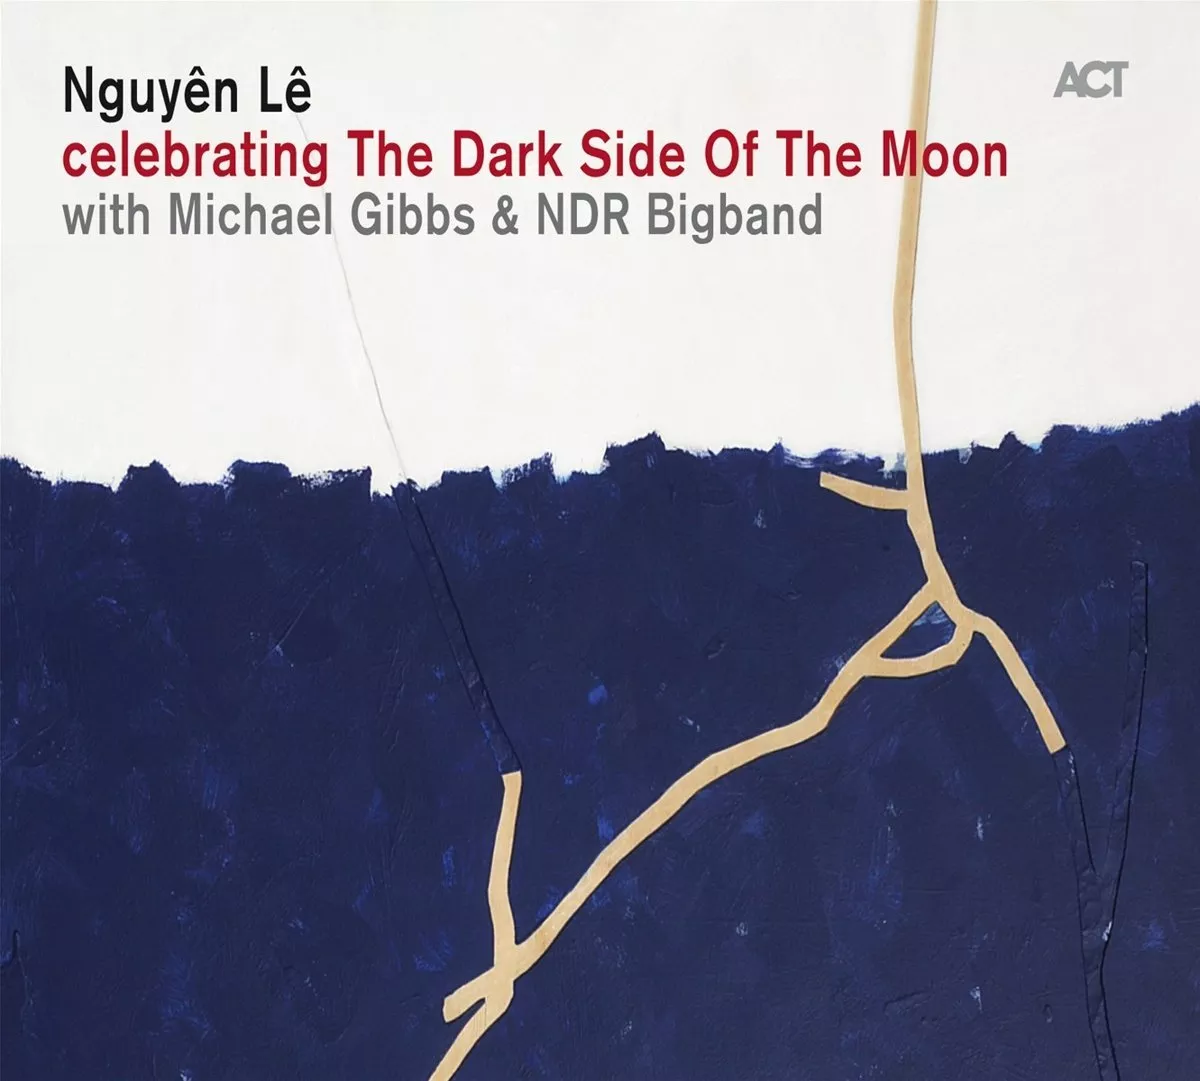 Celebrating The Dark Side Of The Moon - Nguyên Lê with Michael Gibbs & NDR Bigband